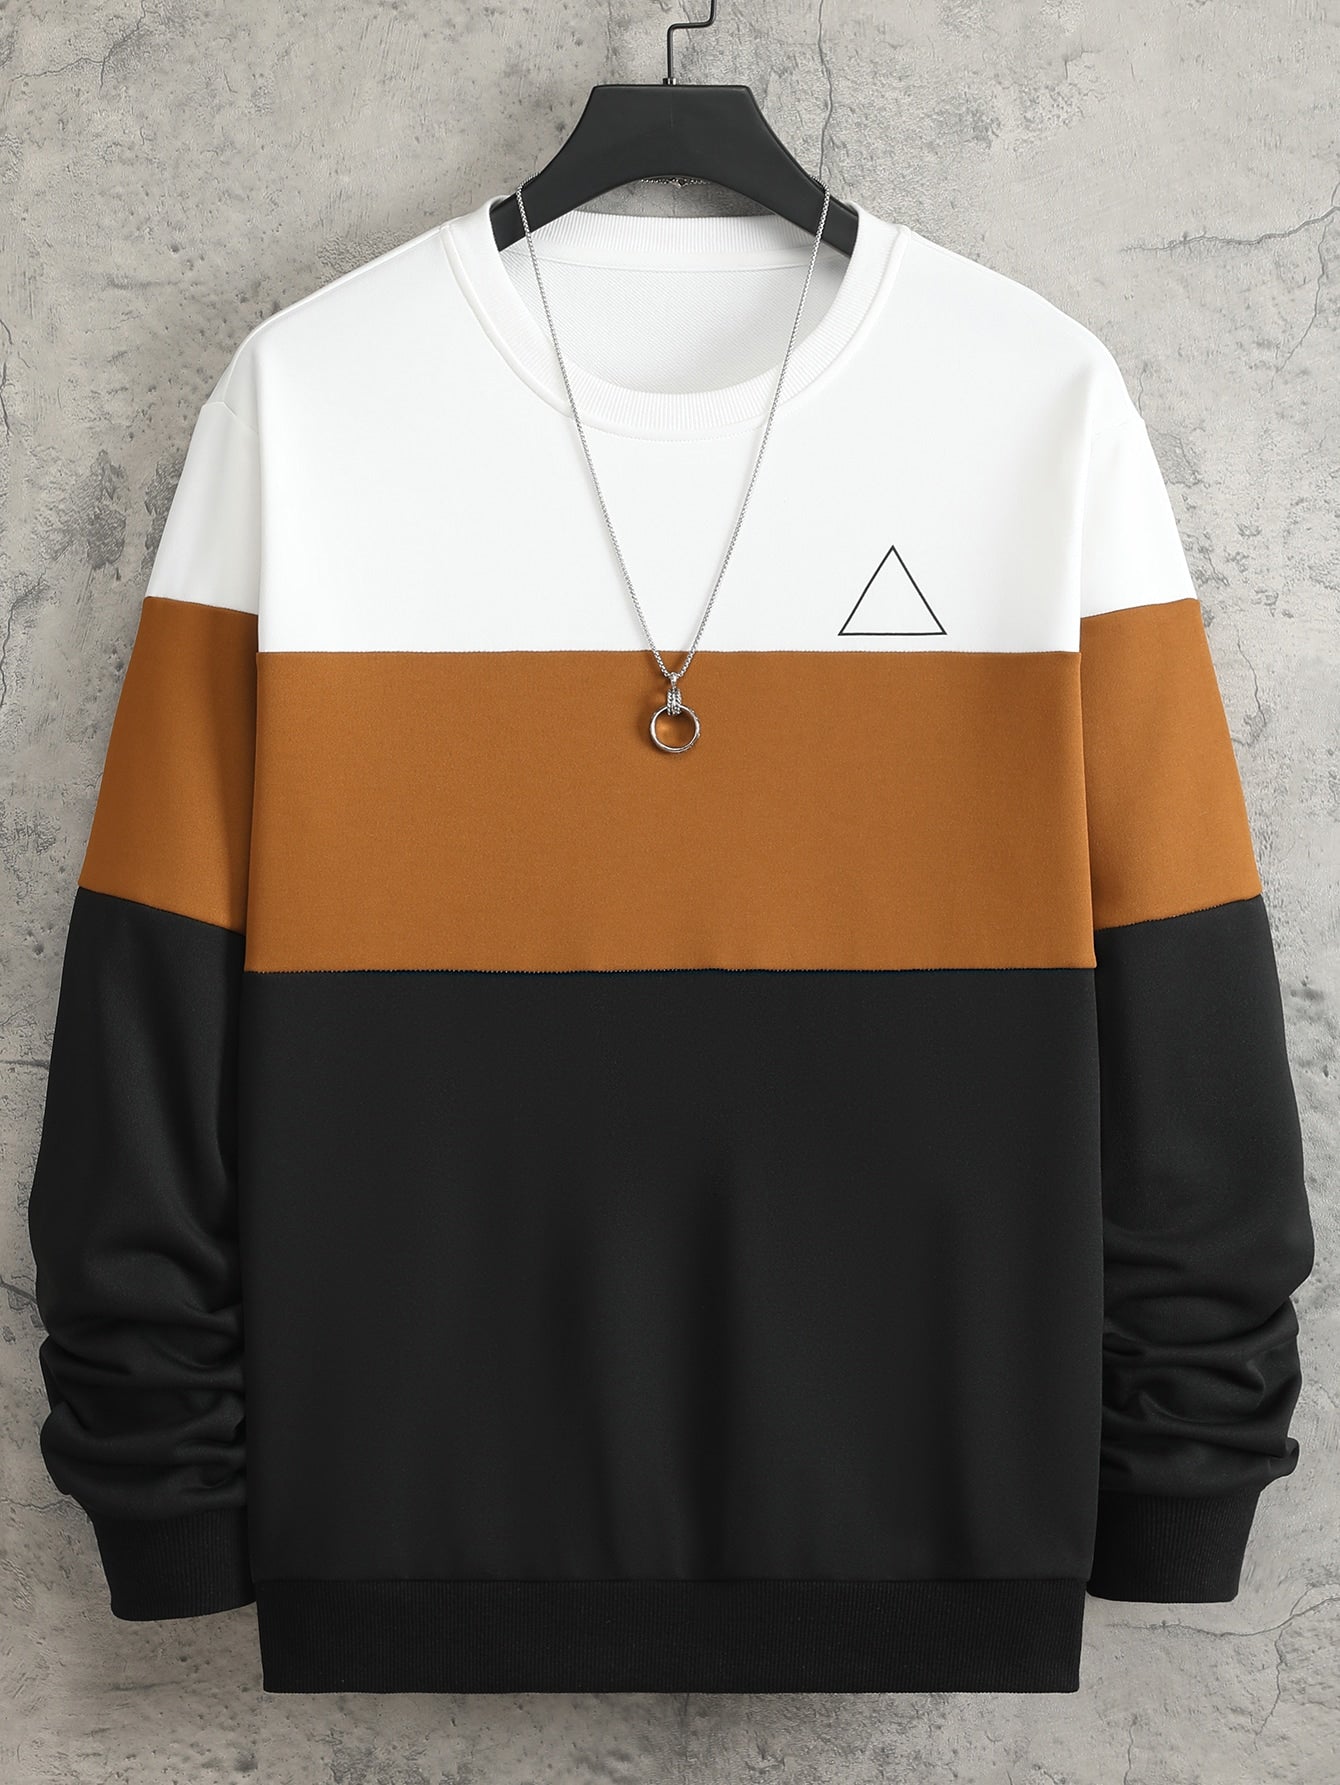 Triangle Sweatshirt_Brown White Black